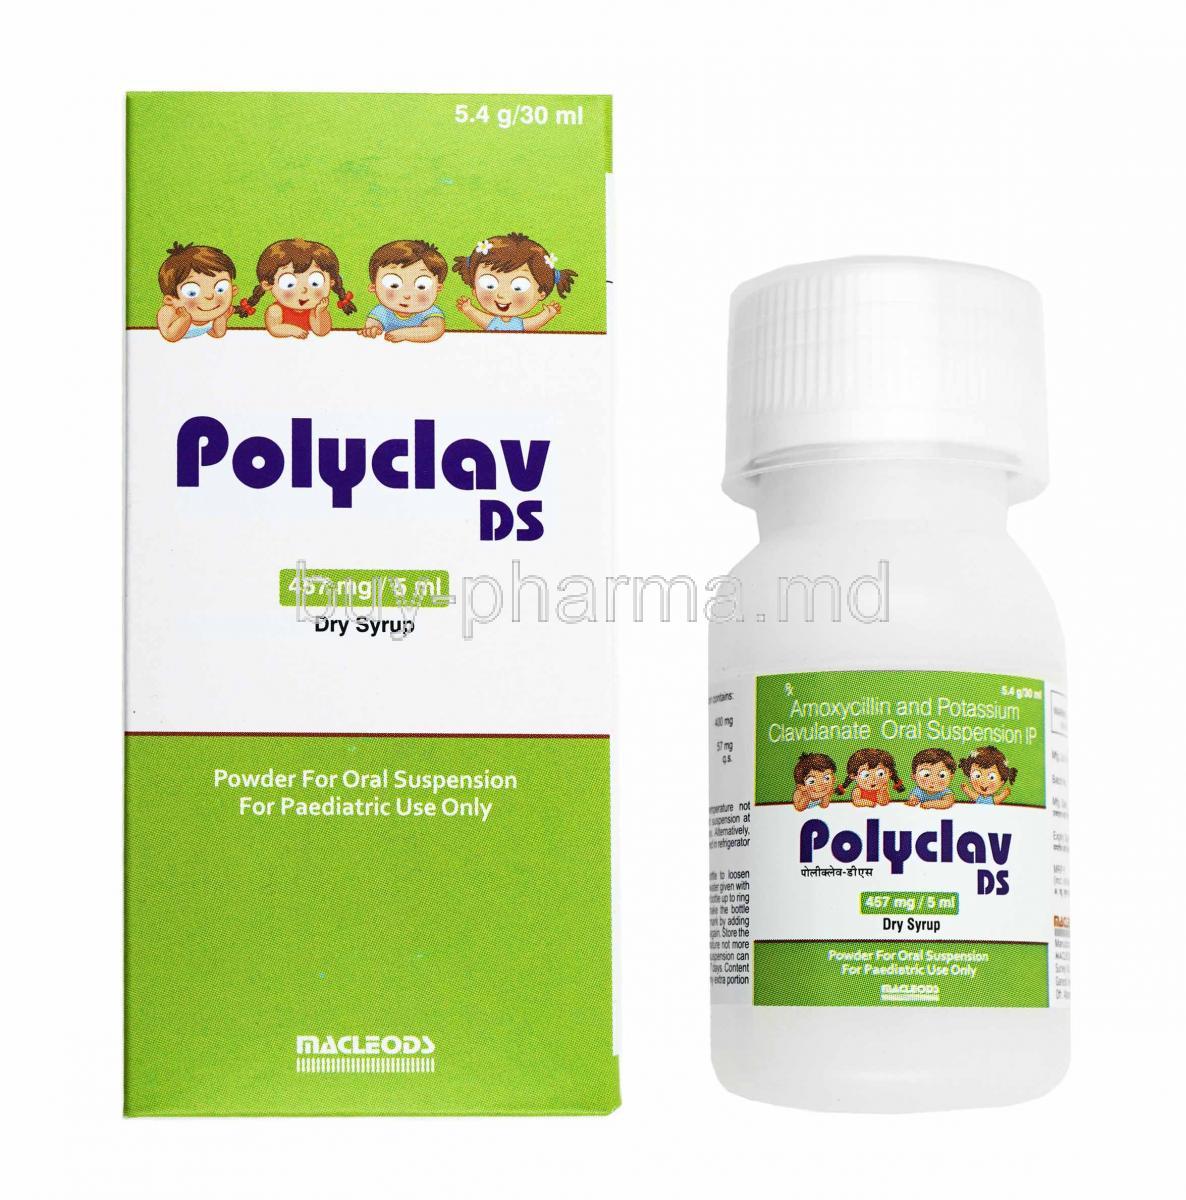 Polyclav DS Dry Syrup, Amoxicillin and Clavulanic Acid box and bottle